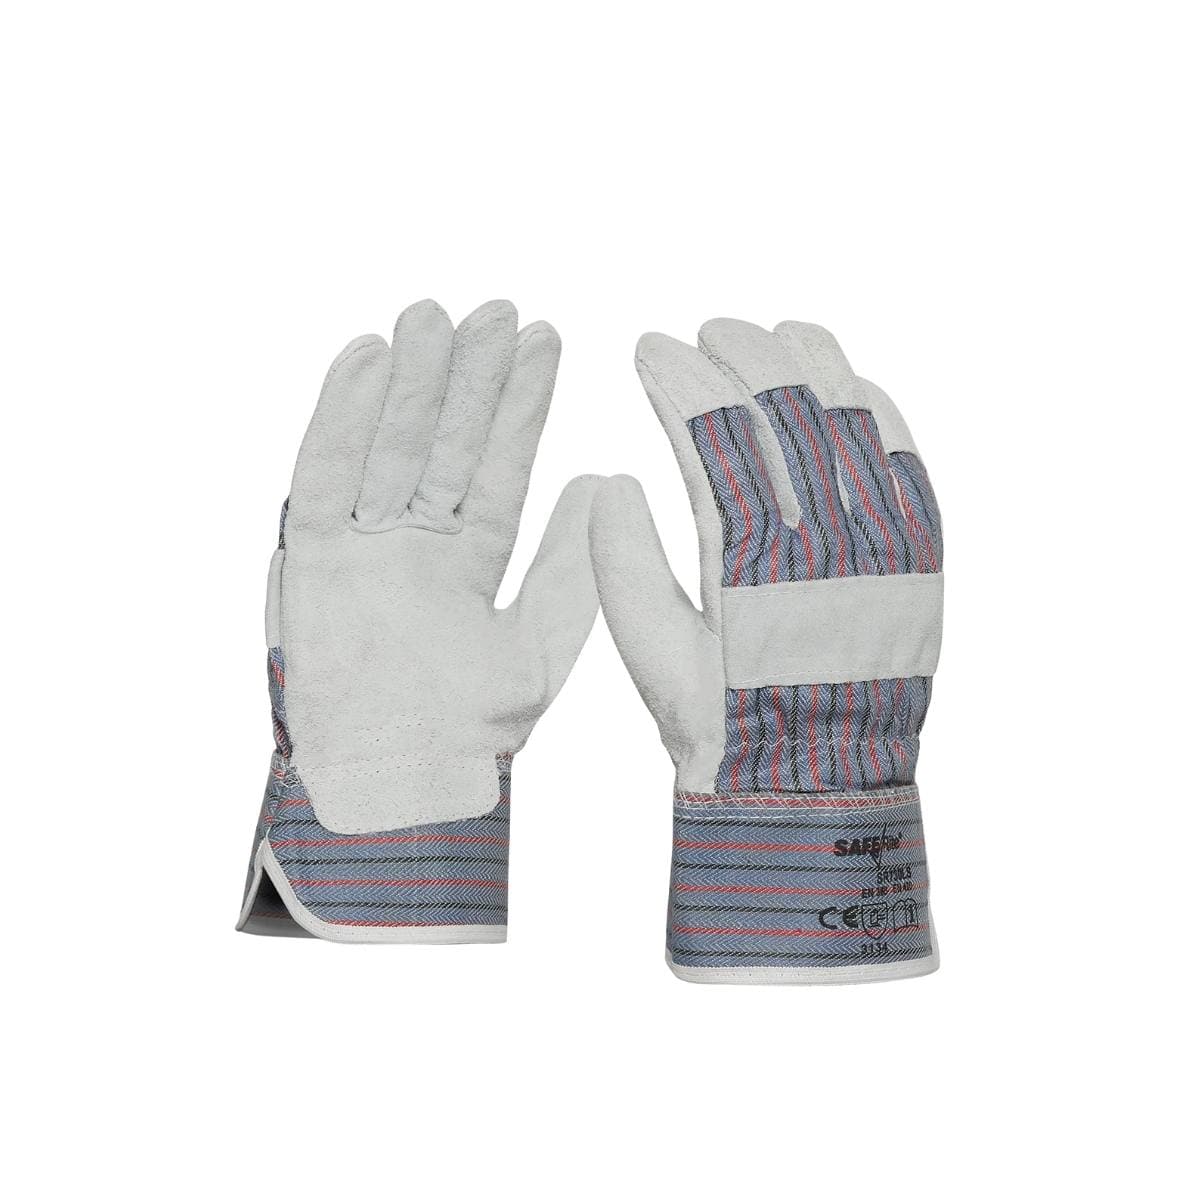 SafeRite® Men's Candy Stripe Glove SR730LS (Pack of 12)